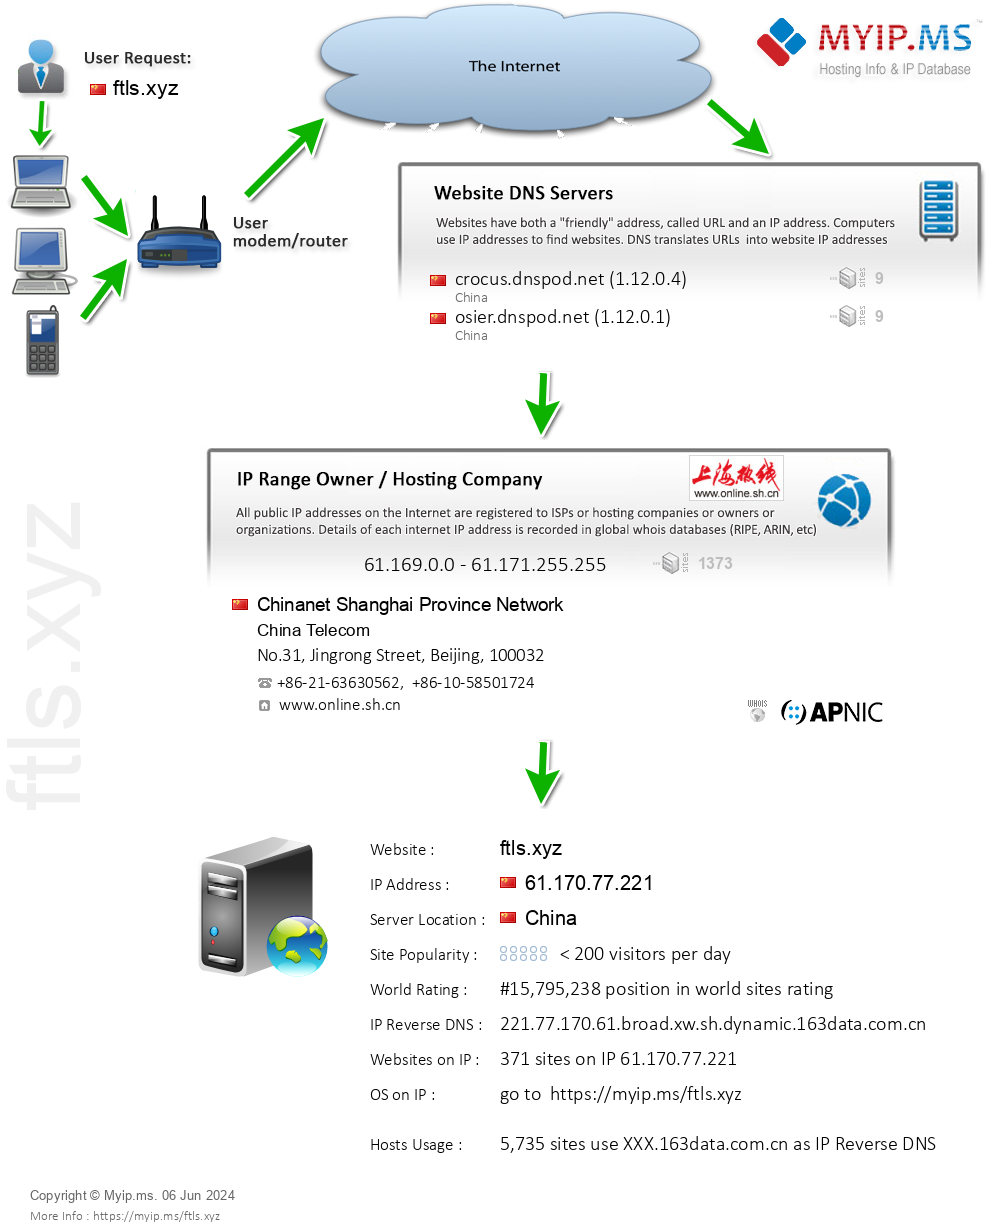 Ftls.xyz - Website Hosting Visual IP Diagram